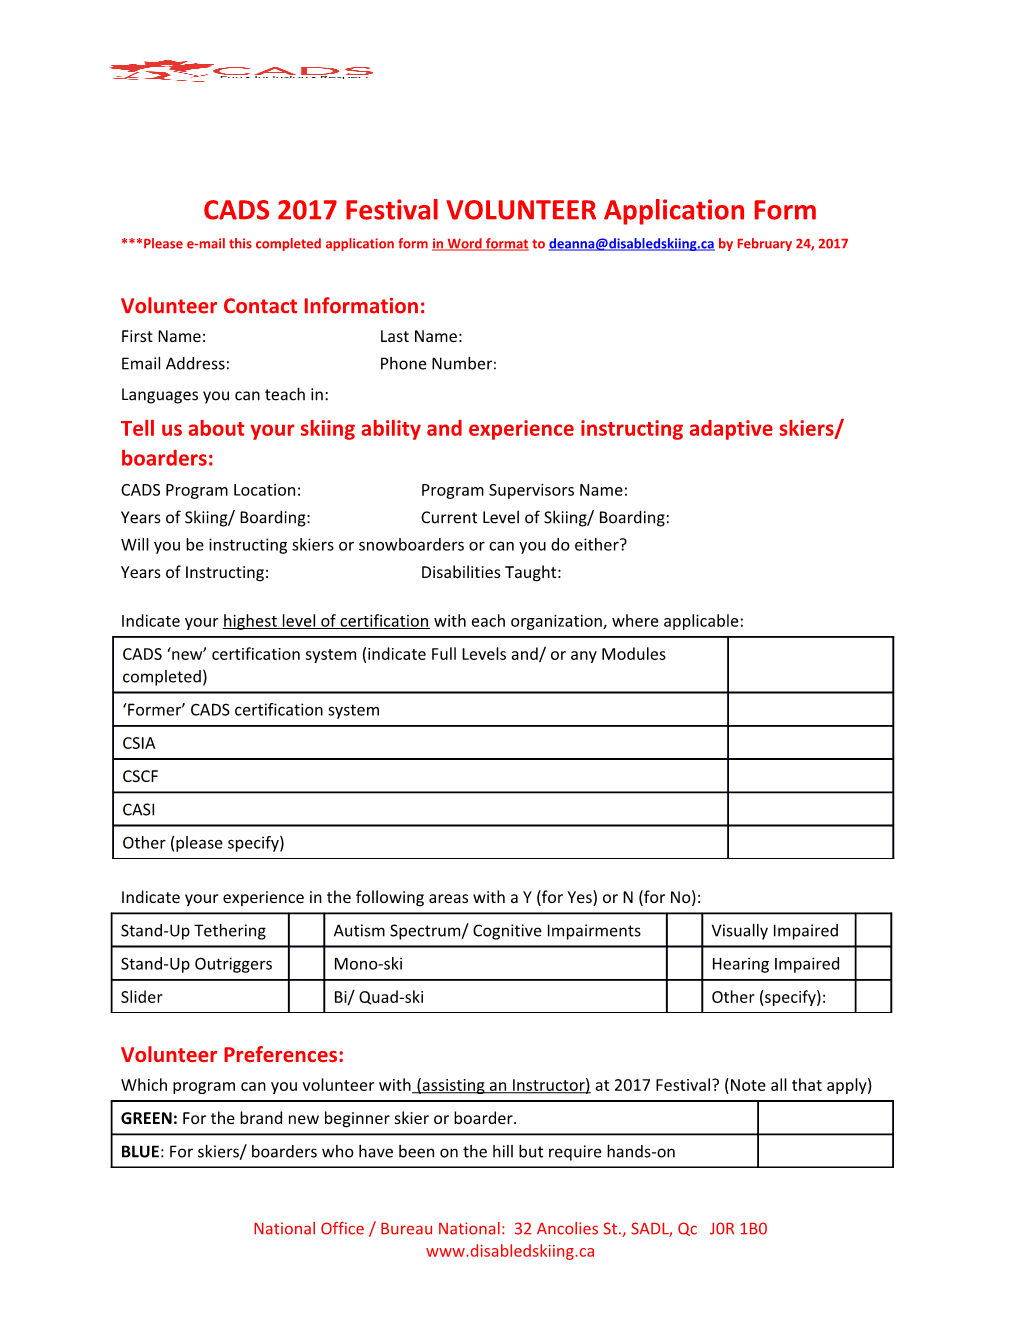 CADS 2017 Festival Volunteerapplication Form